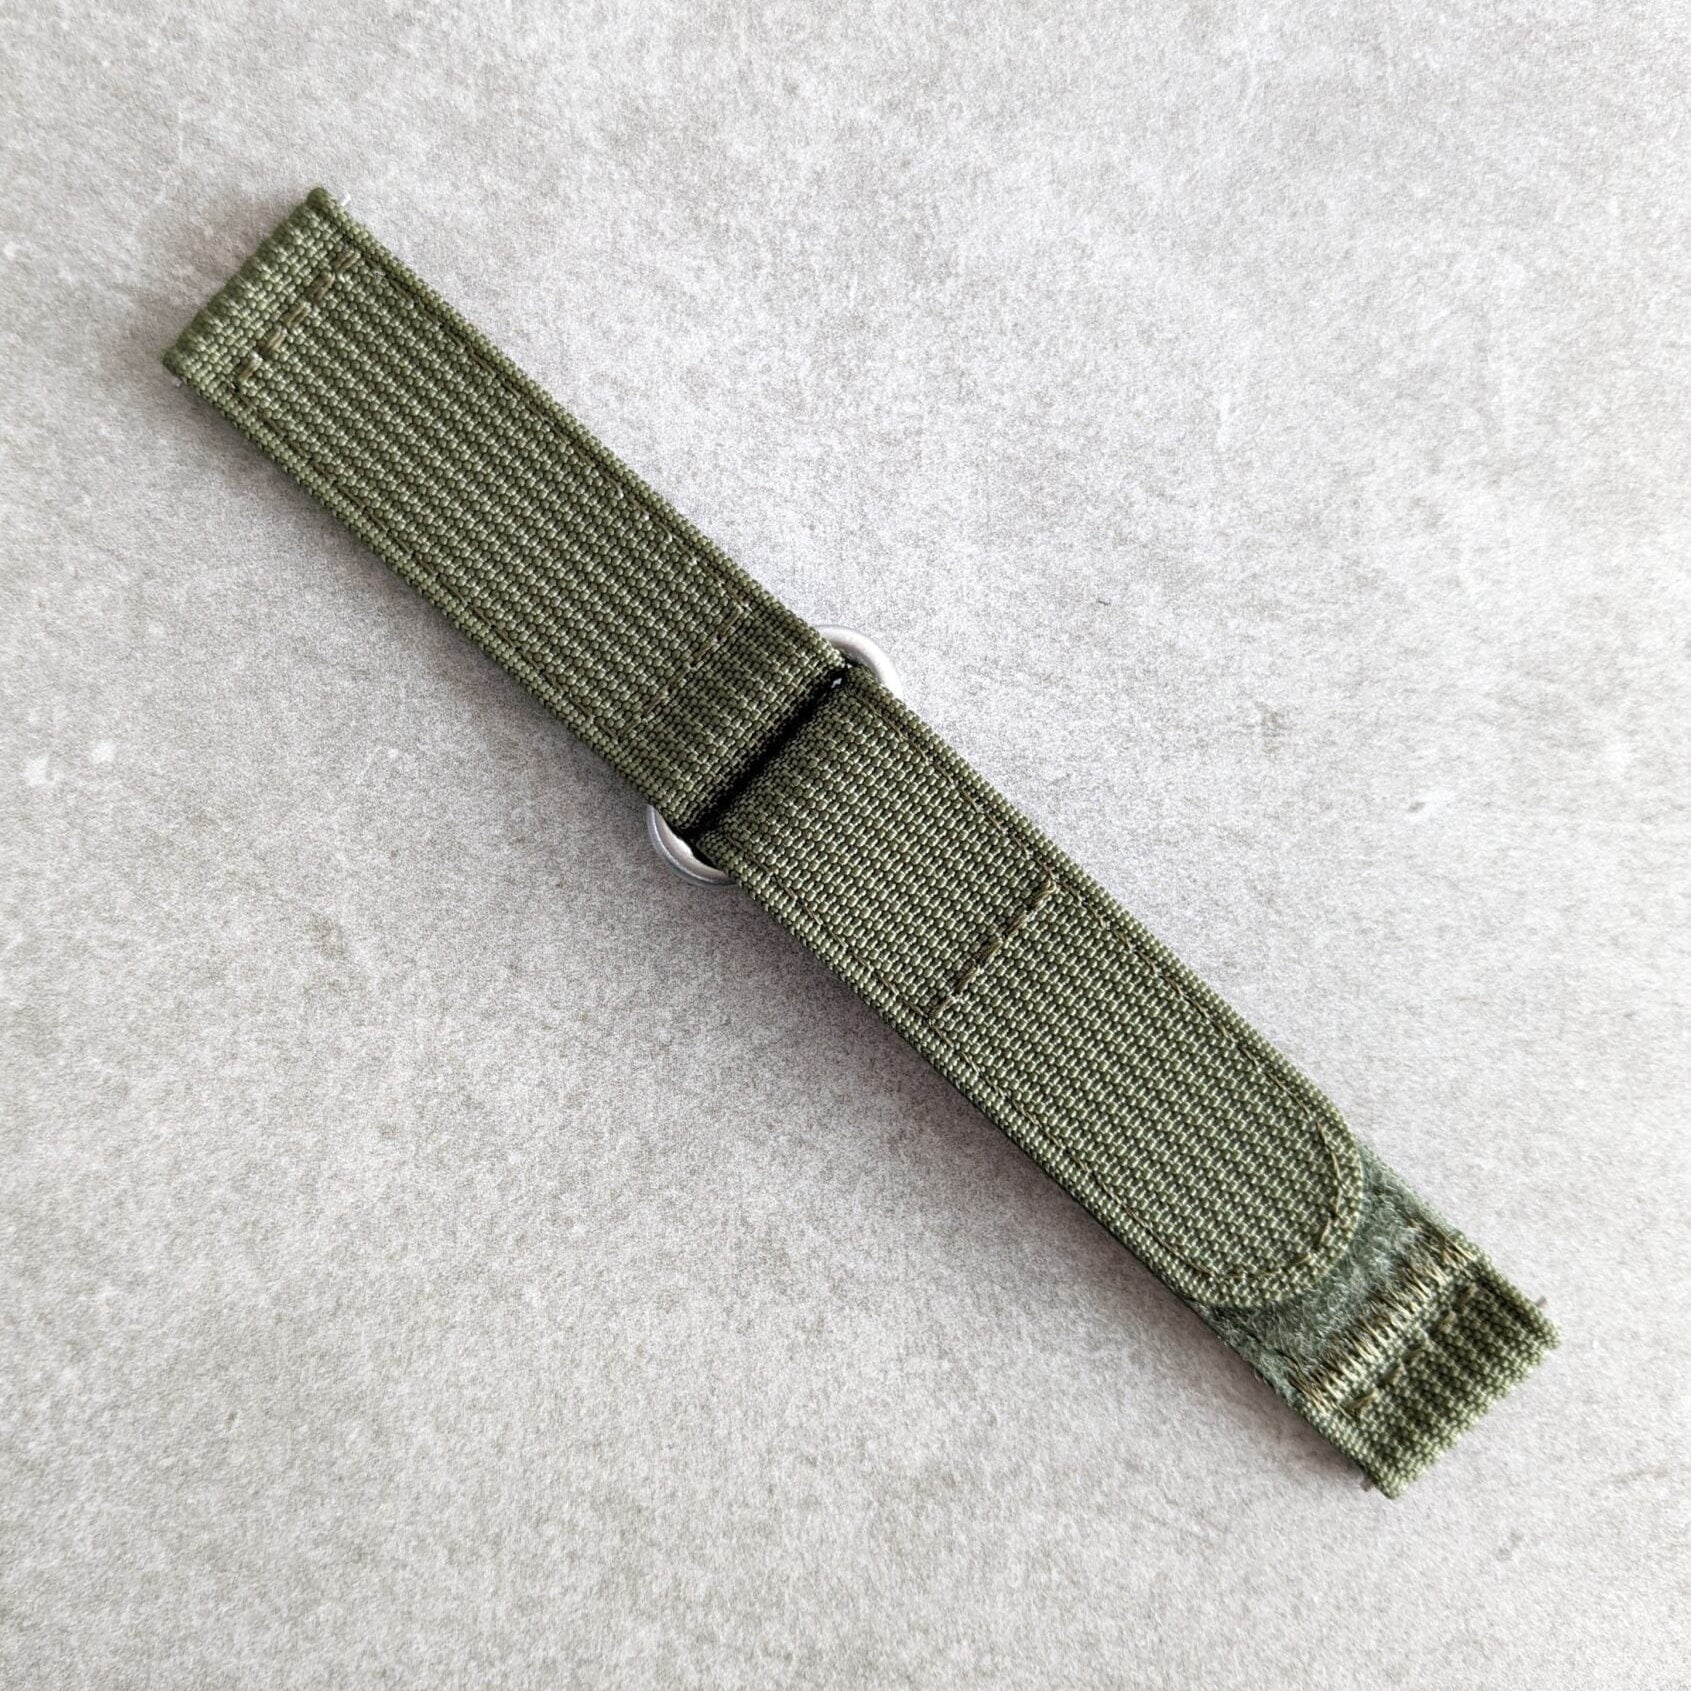 Premium Ribbed Two Piece Ballistic Nylon Strap - Army Green